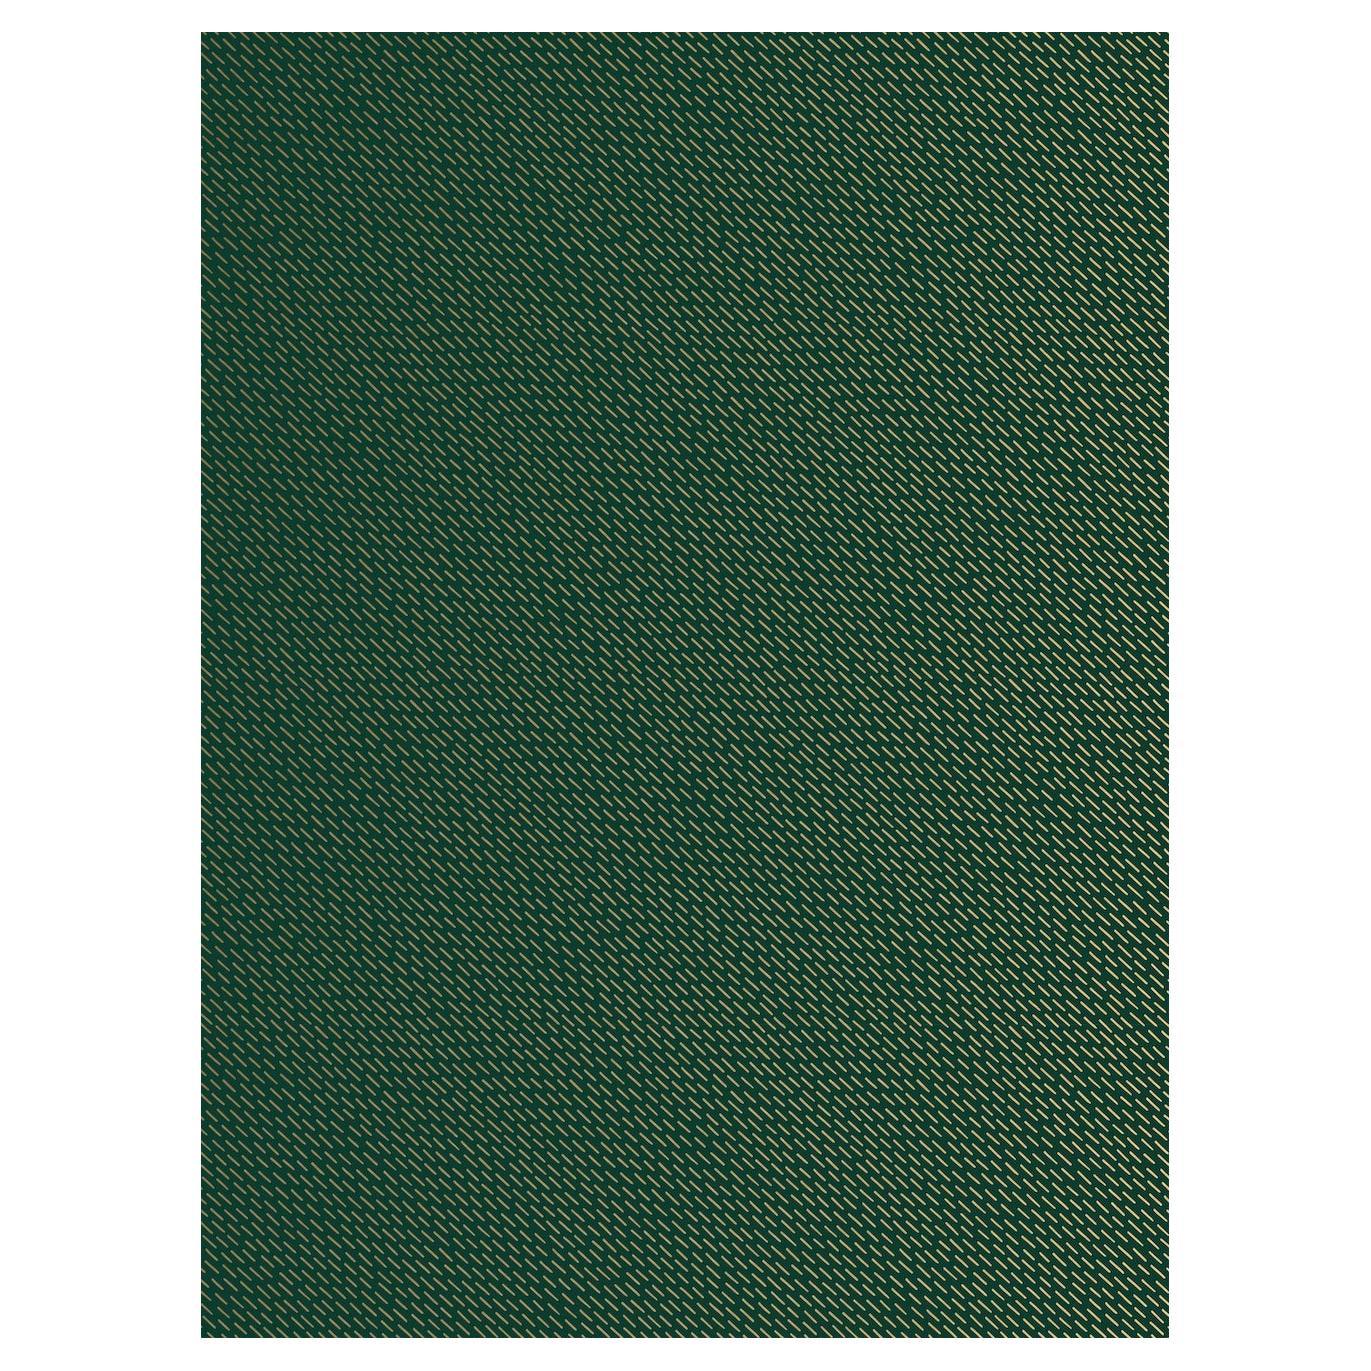 Happy Rain Wallpaper - Green&Gold by Marta Bakowski for La Chance For Sale